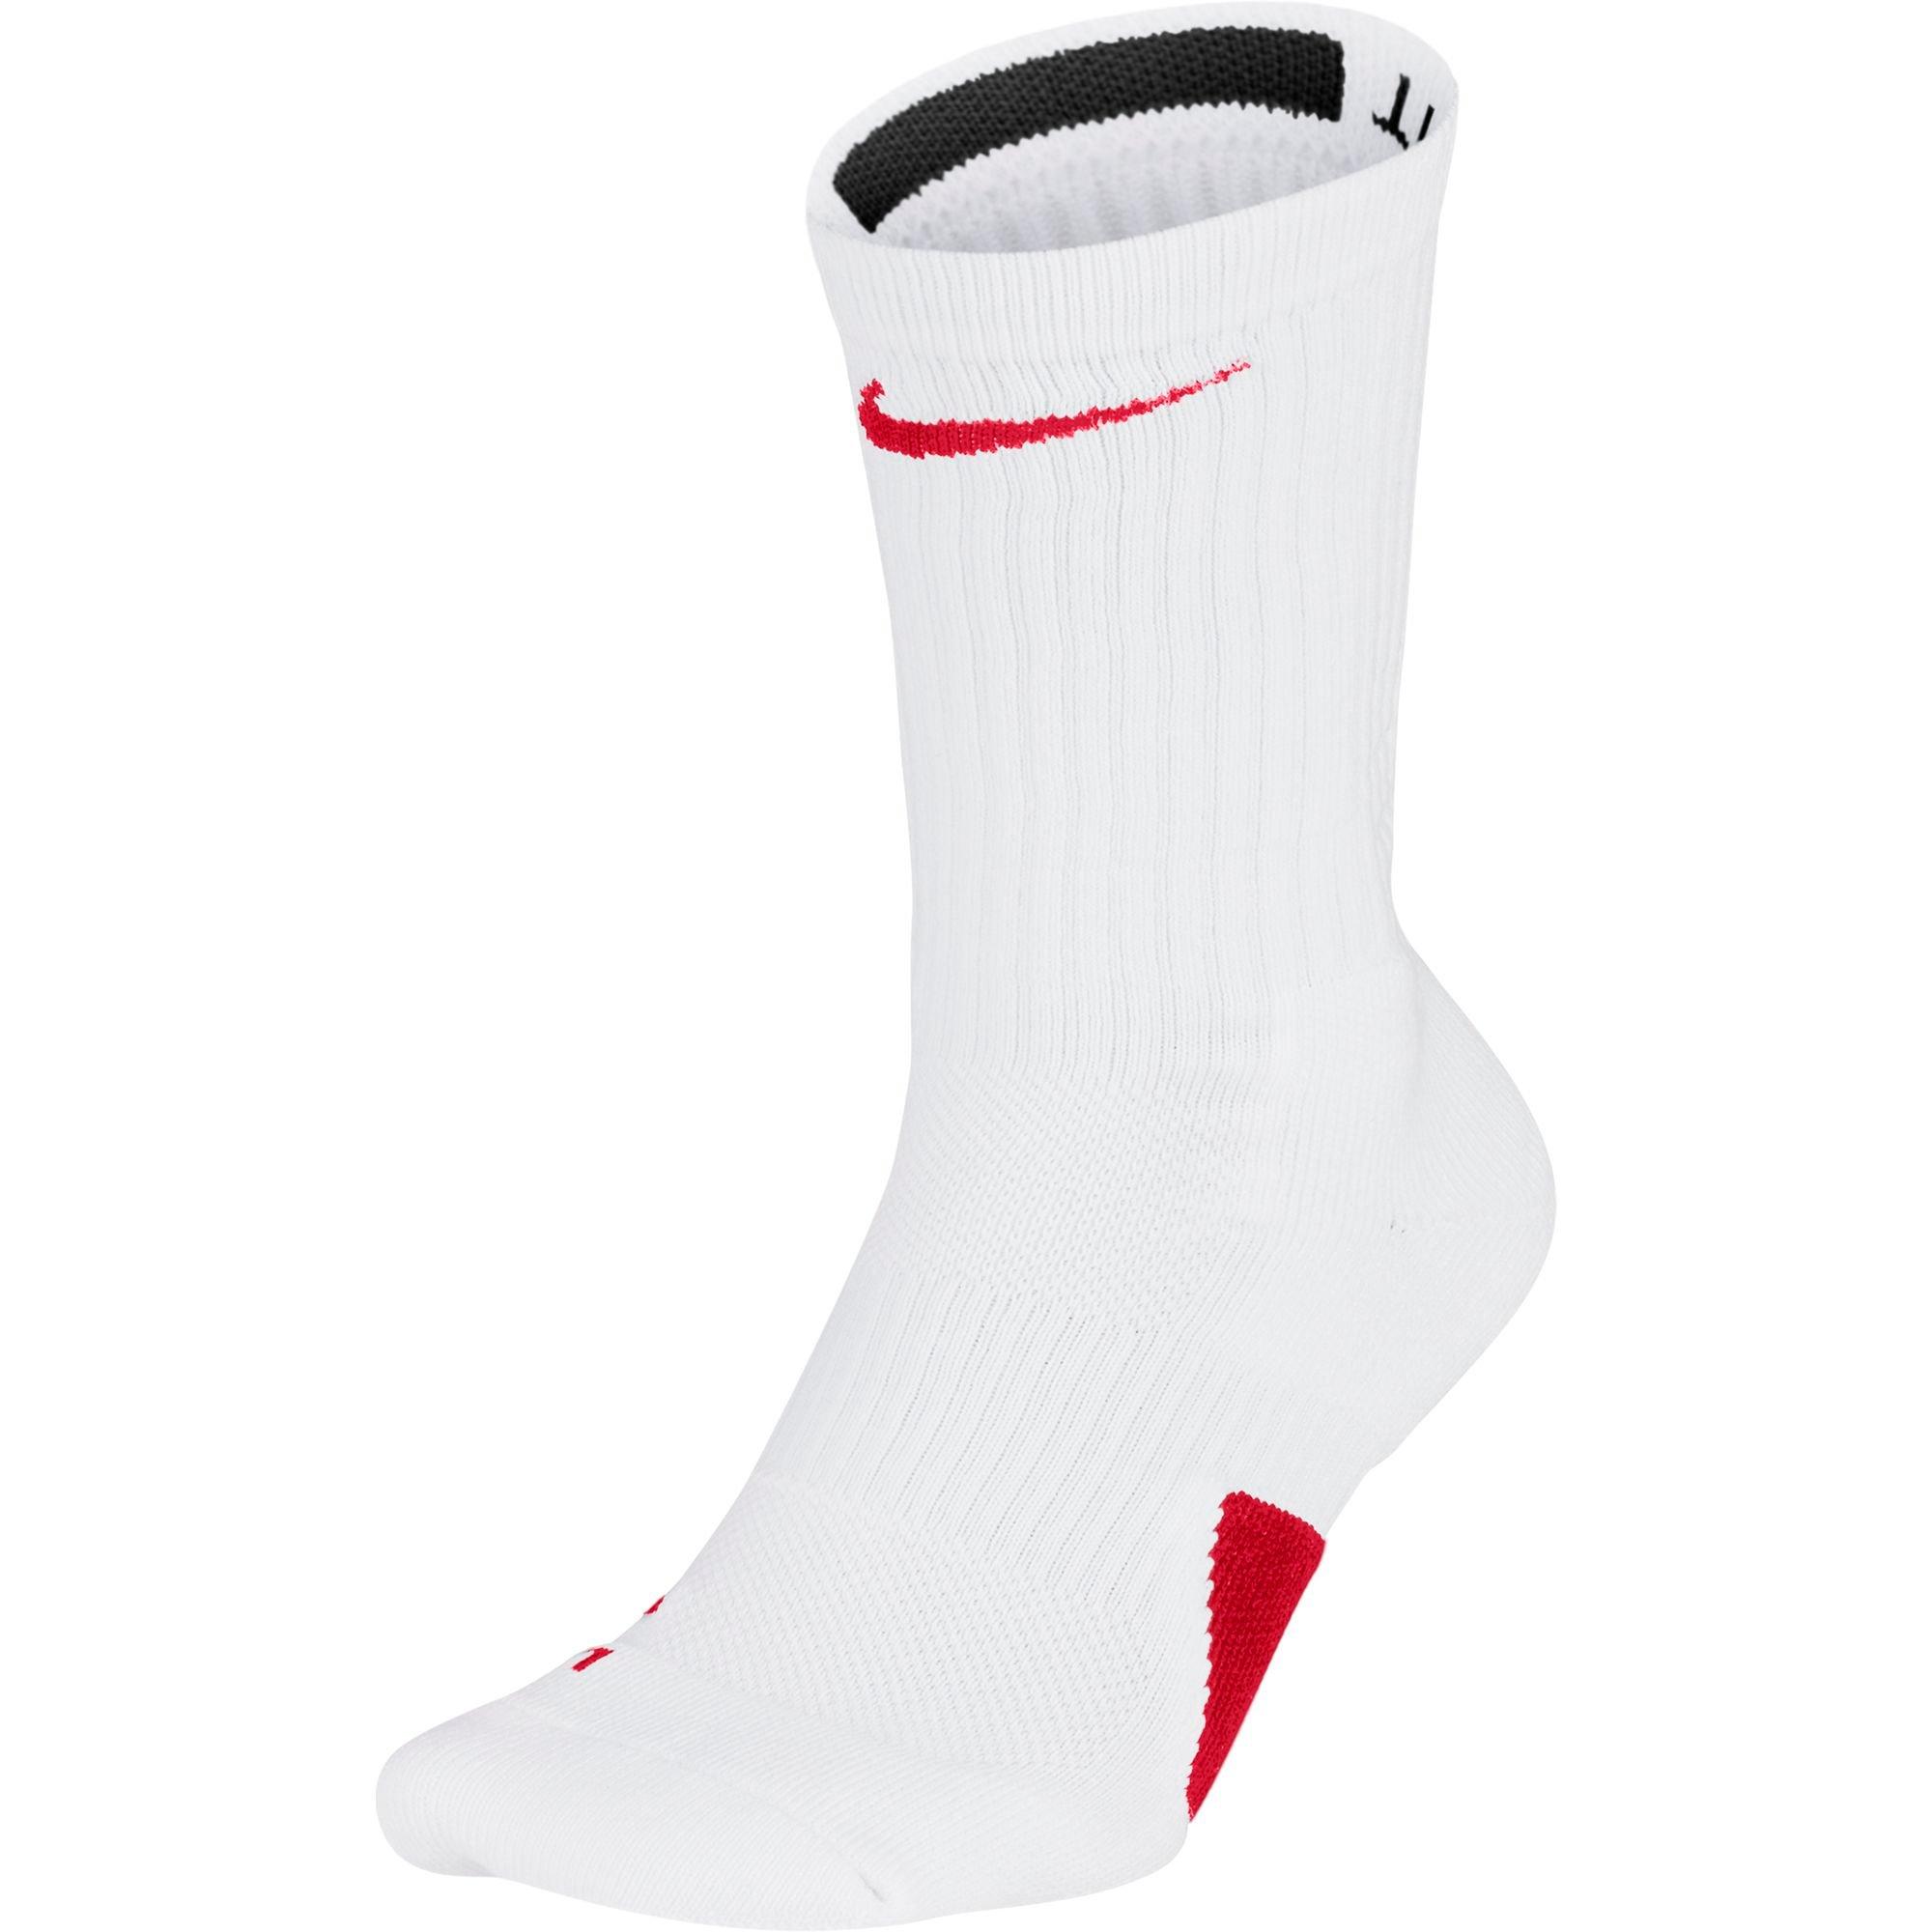 Nodig uit litteken een paar Nike Elite Unisex Crew Basketball Socks - White/Red